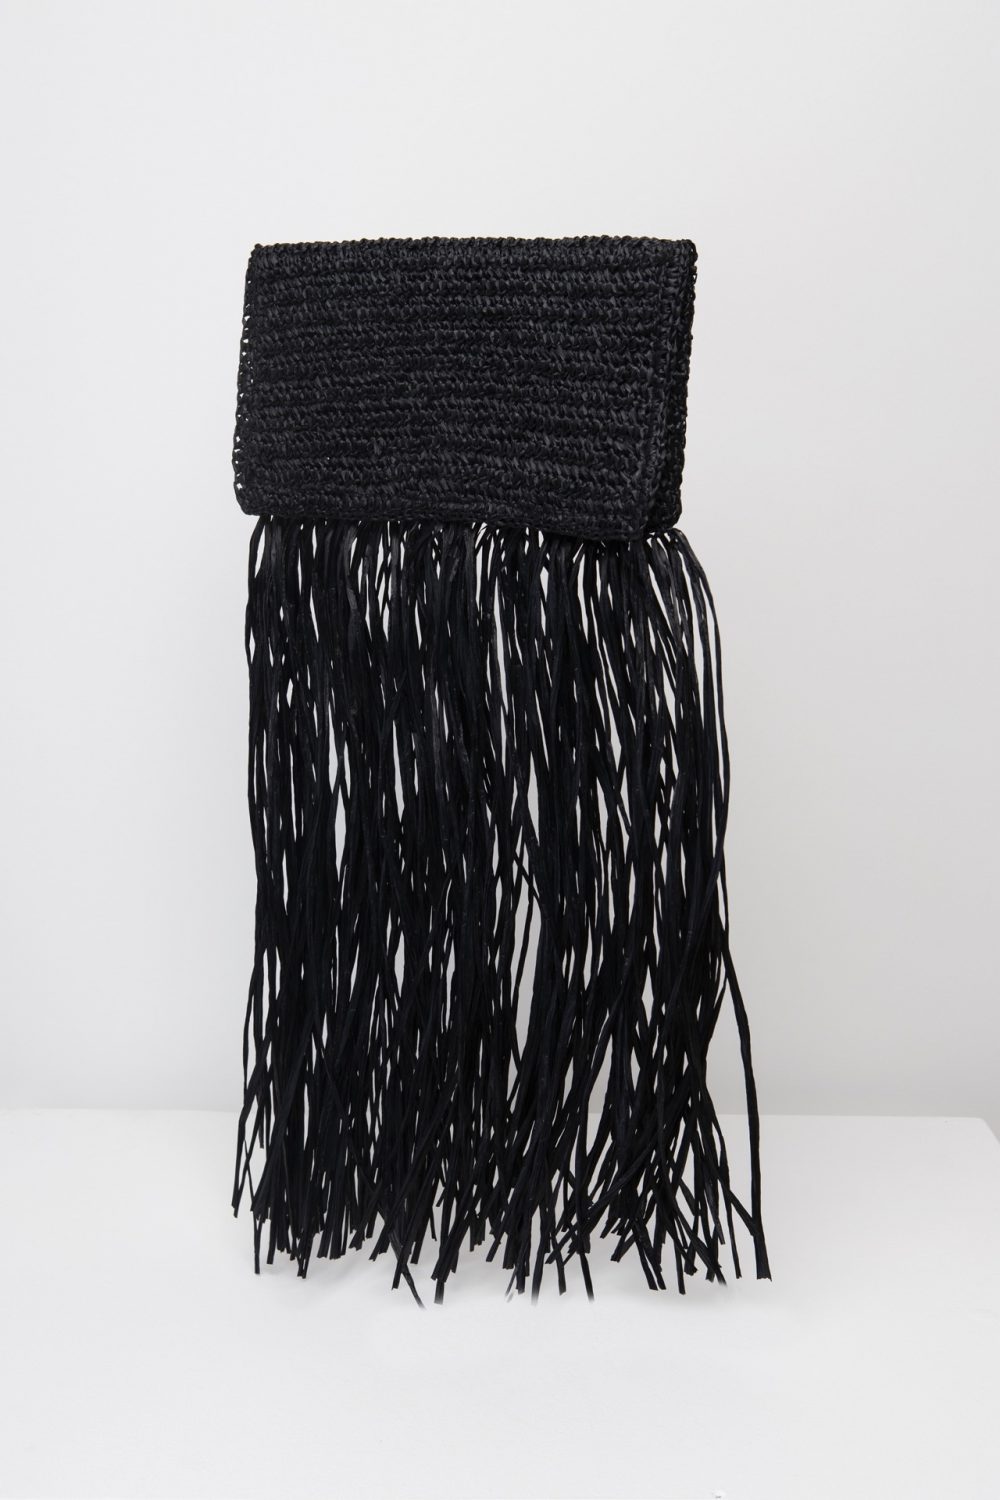 Crochet Clutch bag black2